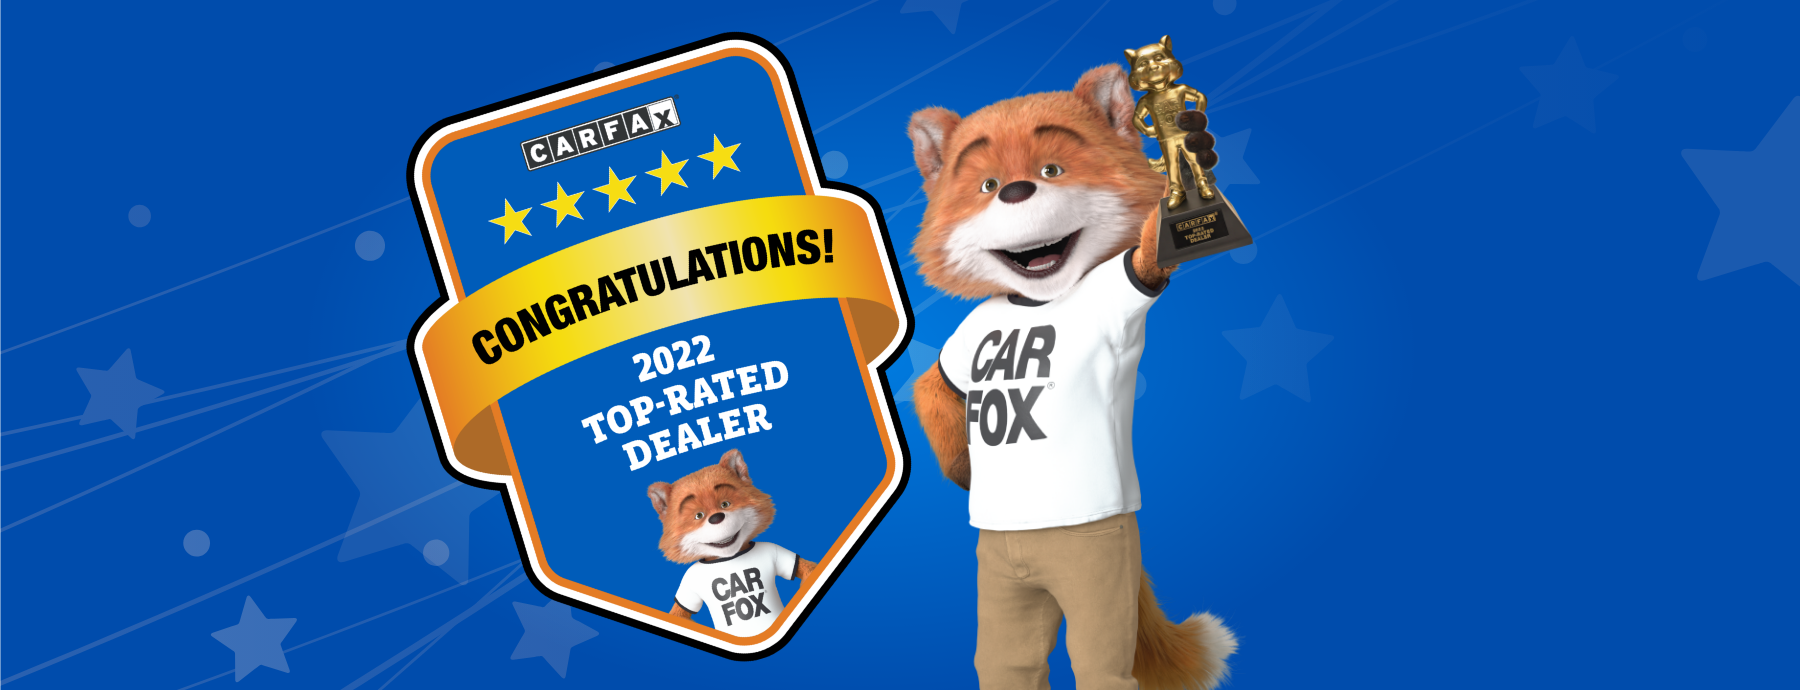 2022 Carfax Top-Rated Dealer